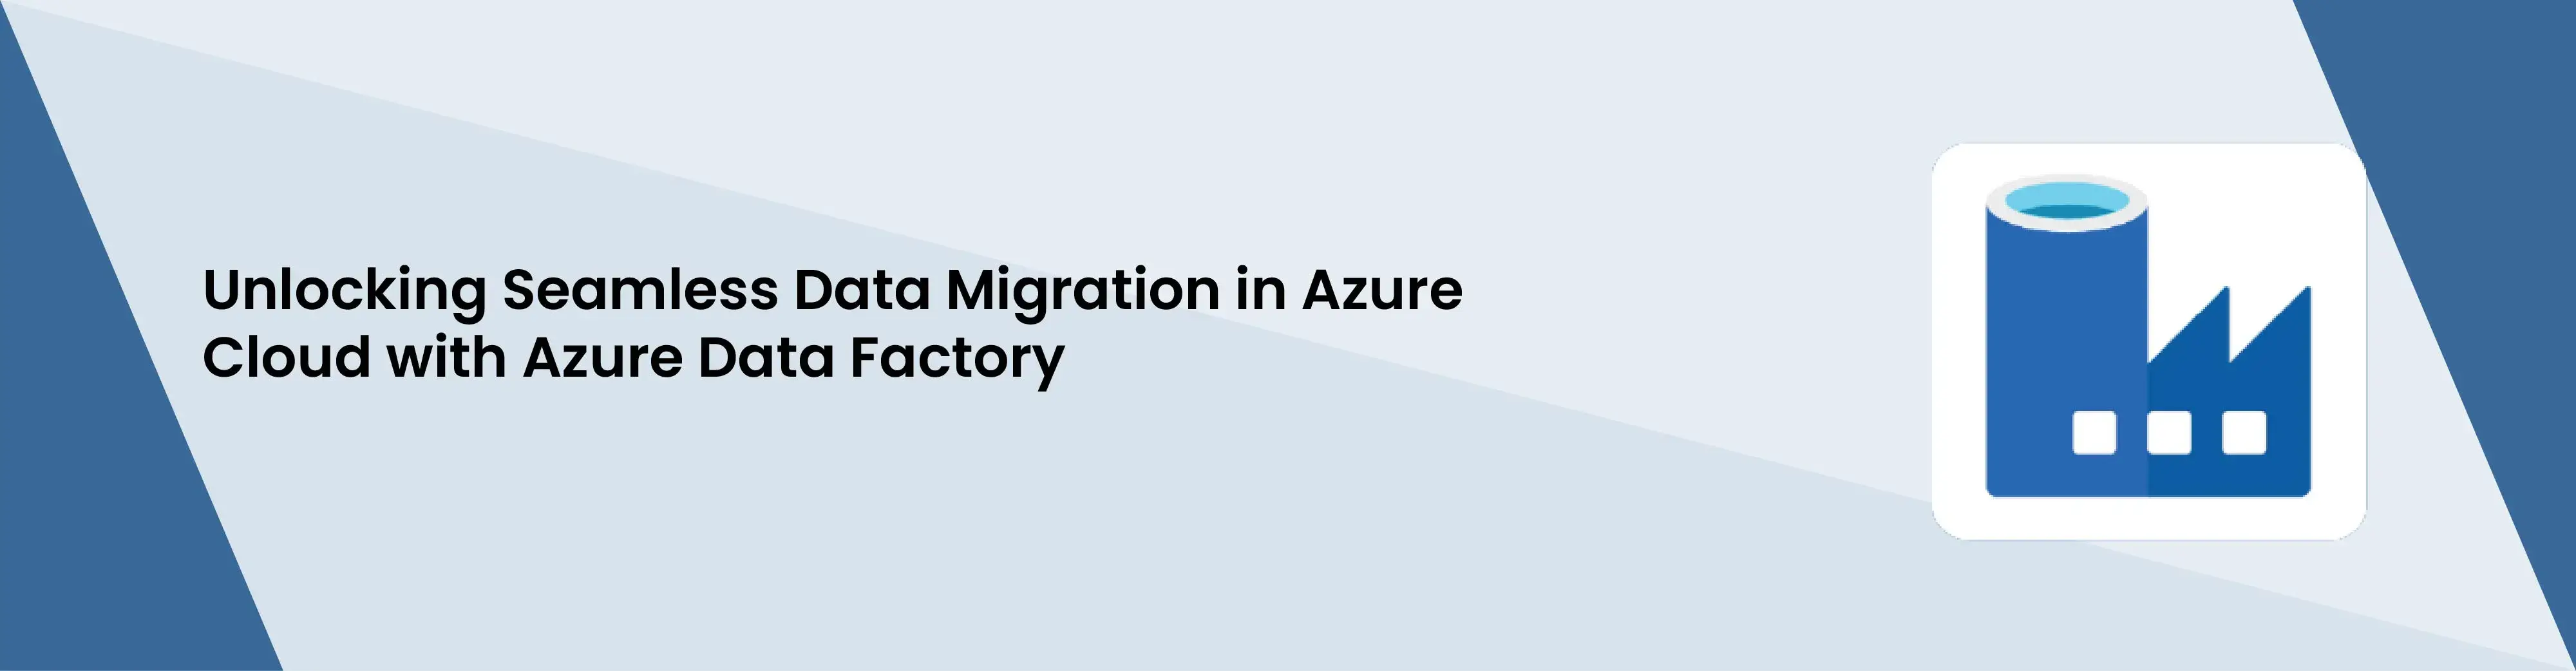 1712296999Unlocking Seamless Data Migration in Azure Cloud with Azure Data Factory.webp